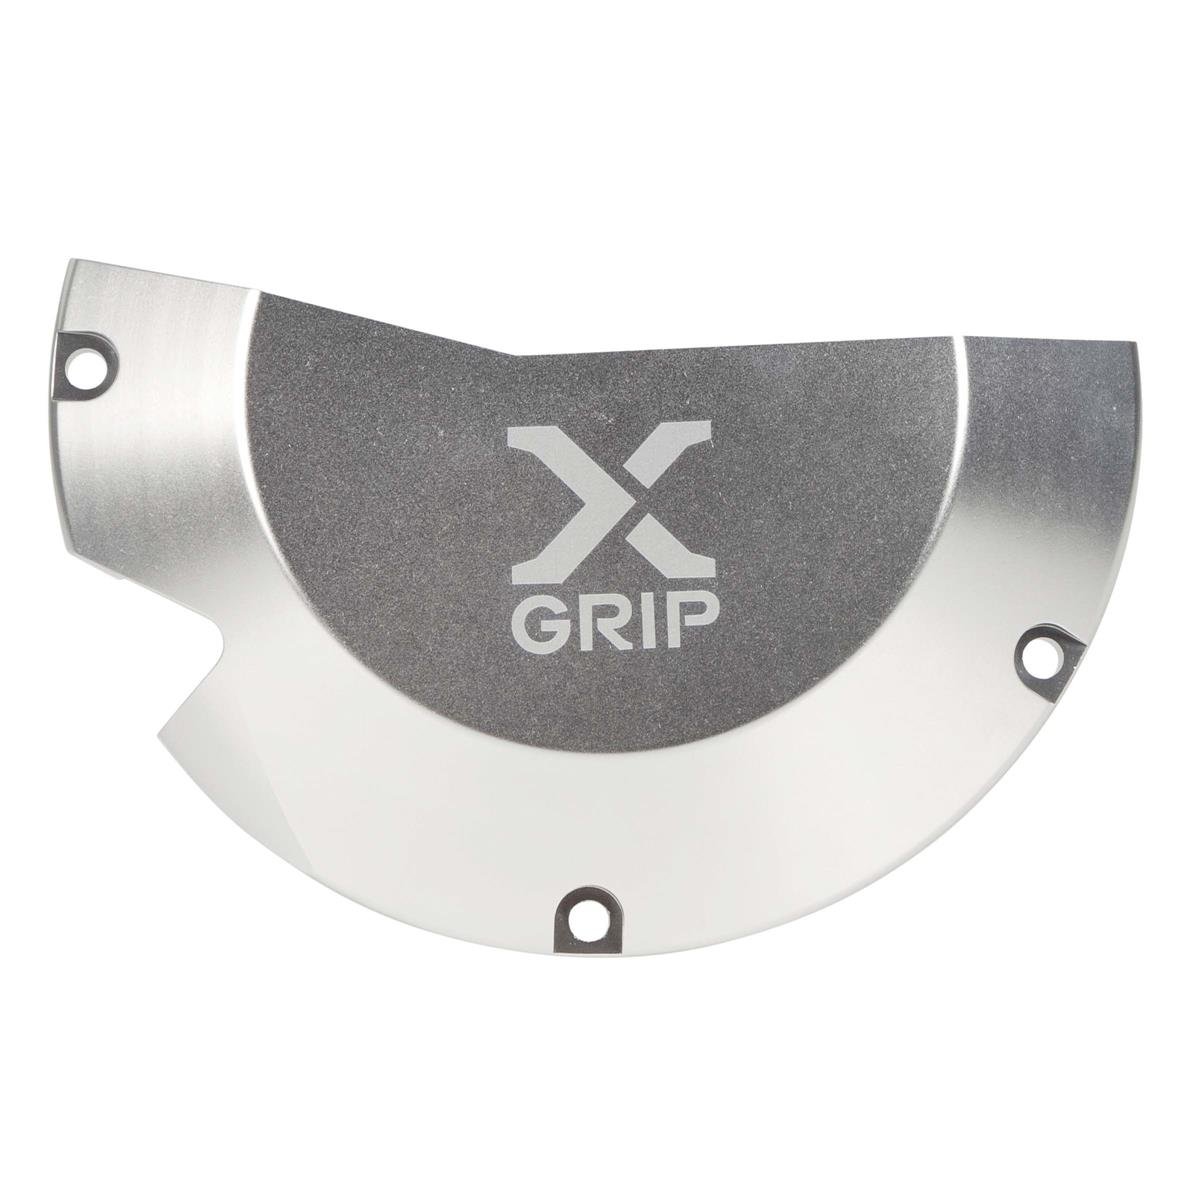 X-Grip Clutch protektor Clutch Cover Guard Beta RR 250/300, XTrainer 18-20, Silver